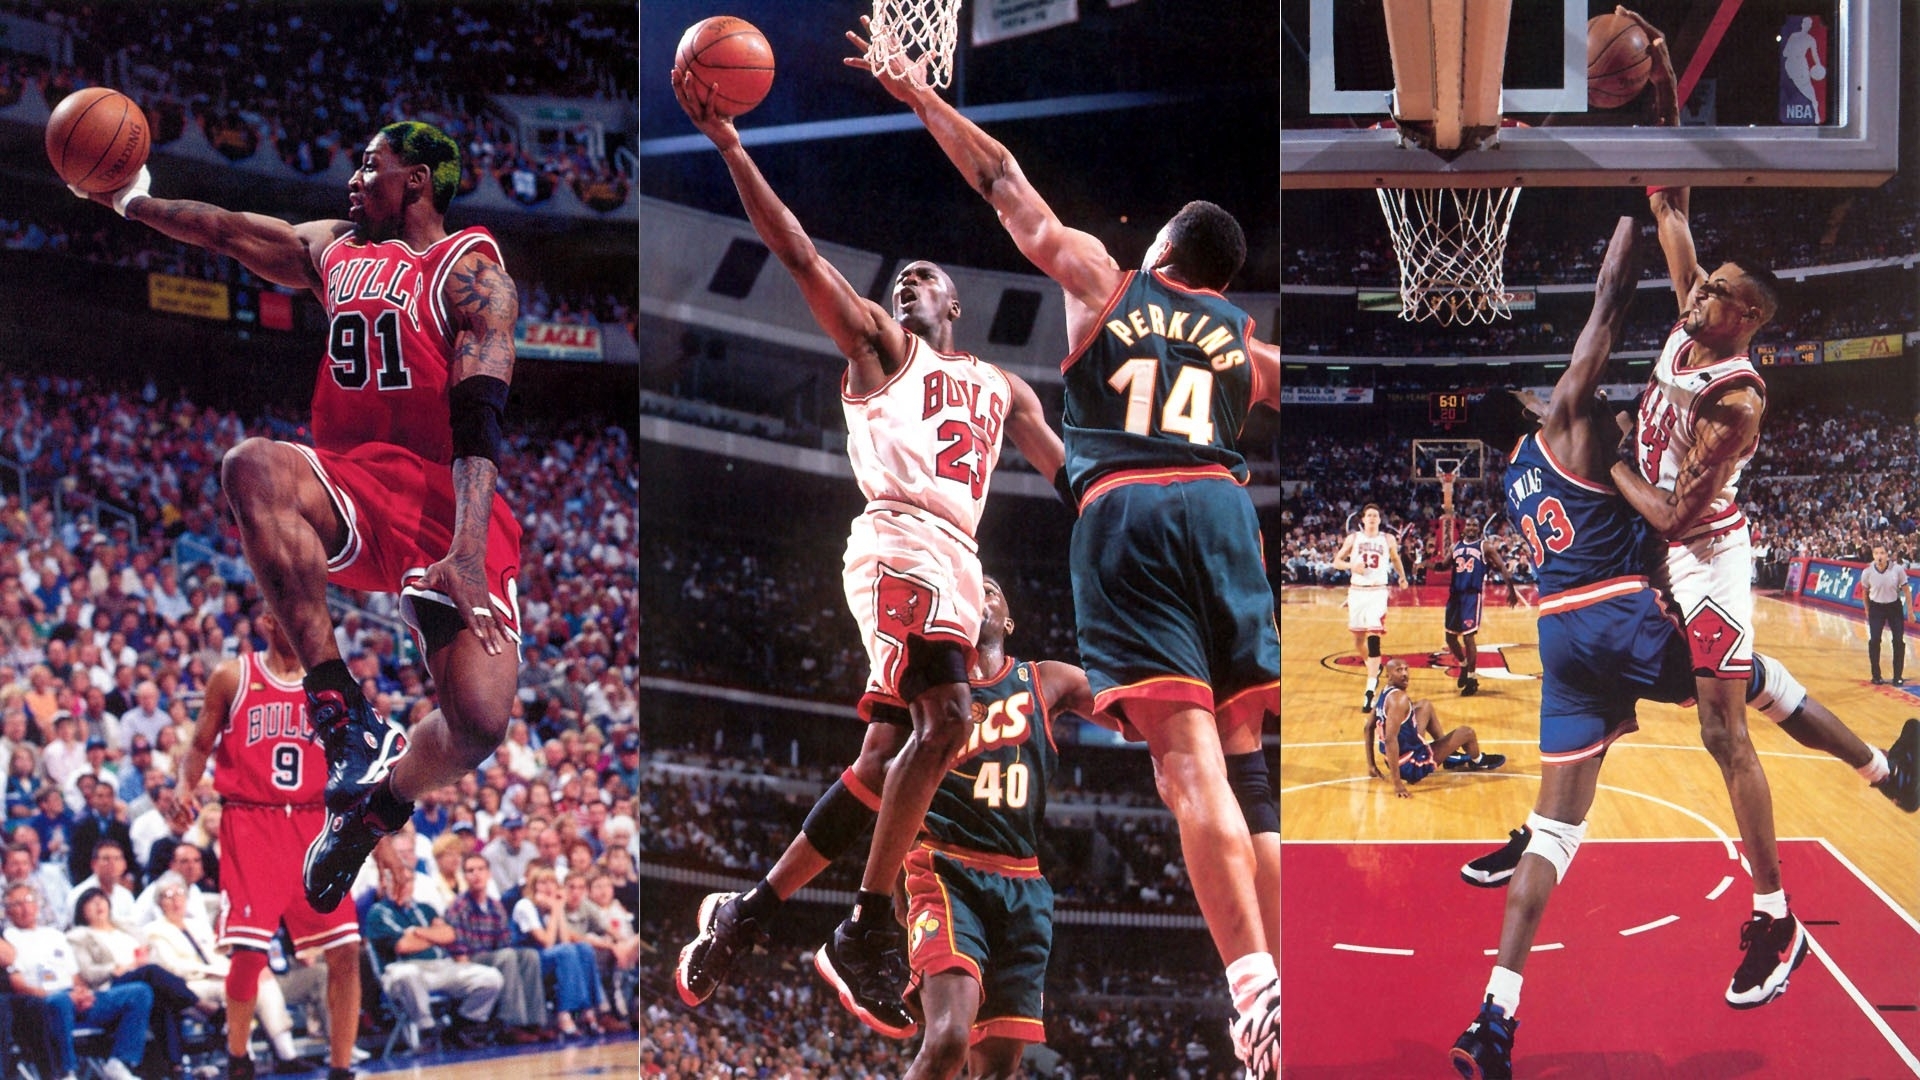 Sports nba basketball michael jordan chicago bulls dennis rodman scottie pippen wallpaperx1080